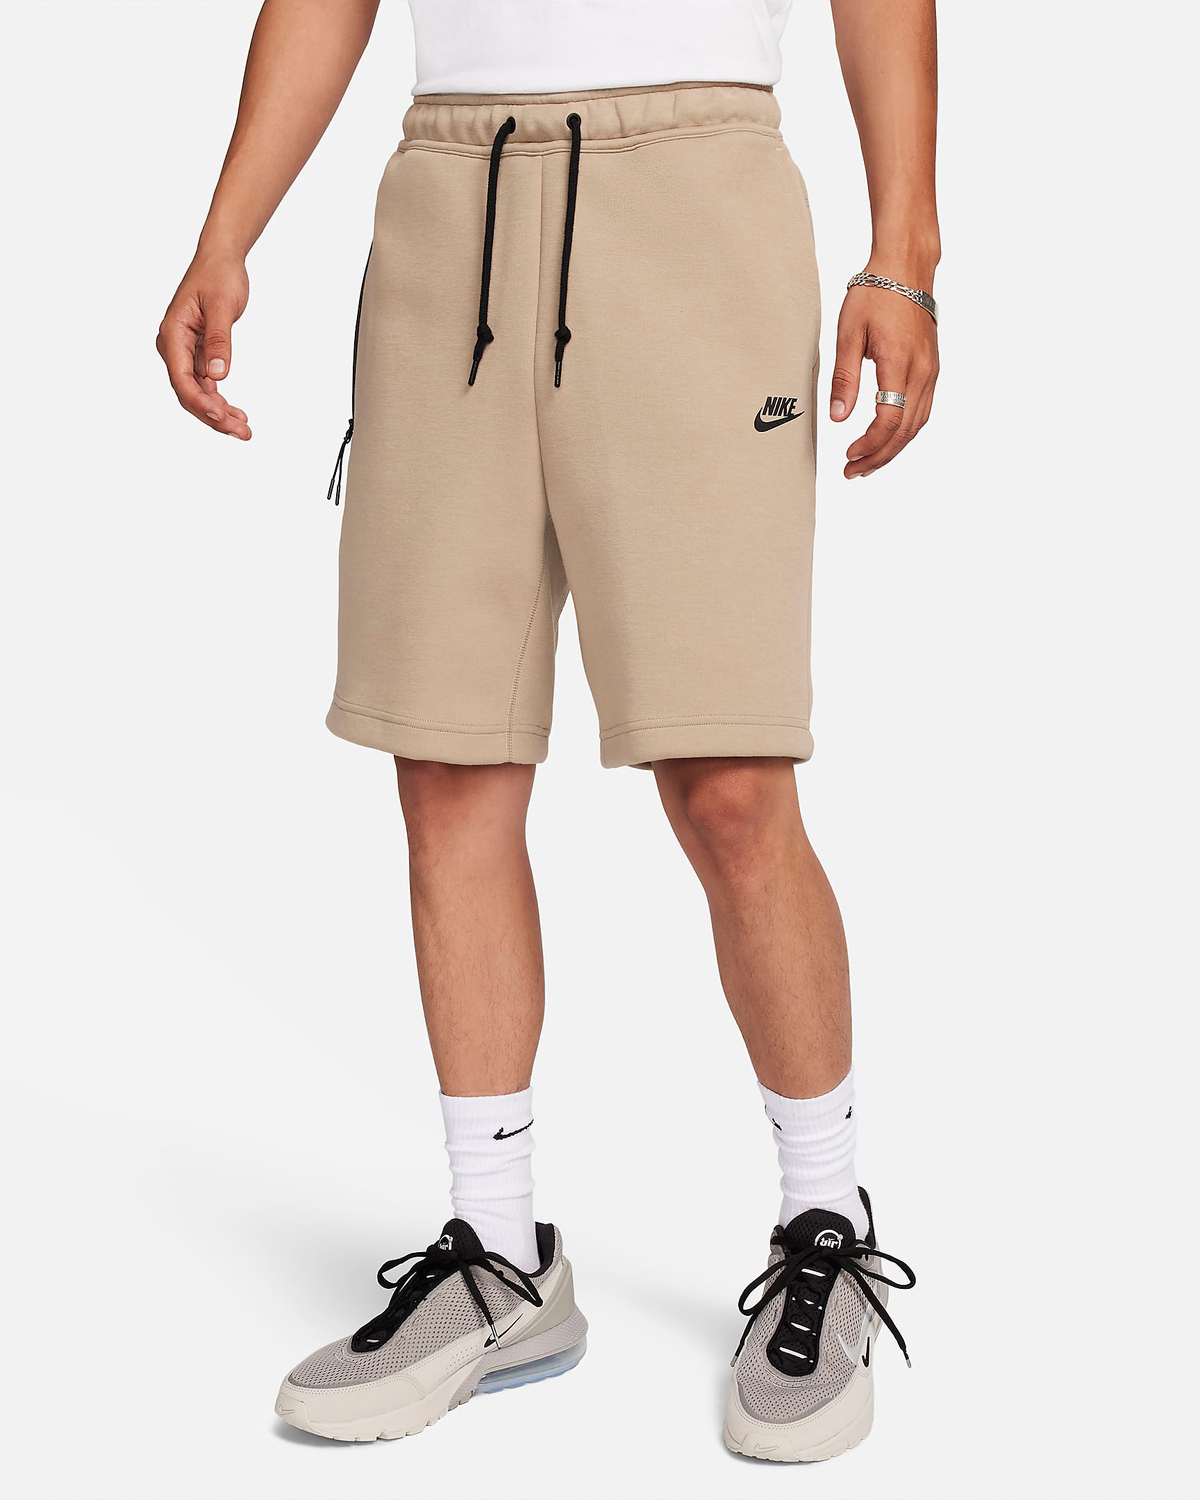 Nike-Tech-Fleece-Shorts-Khaki